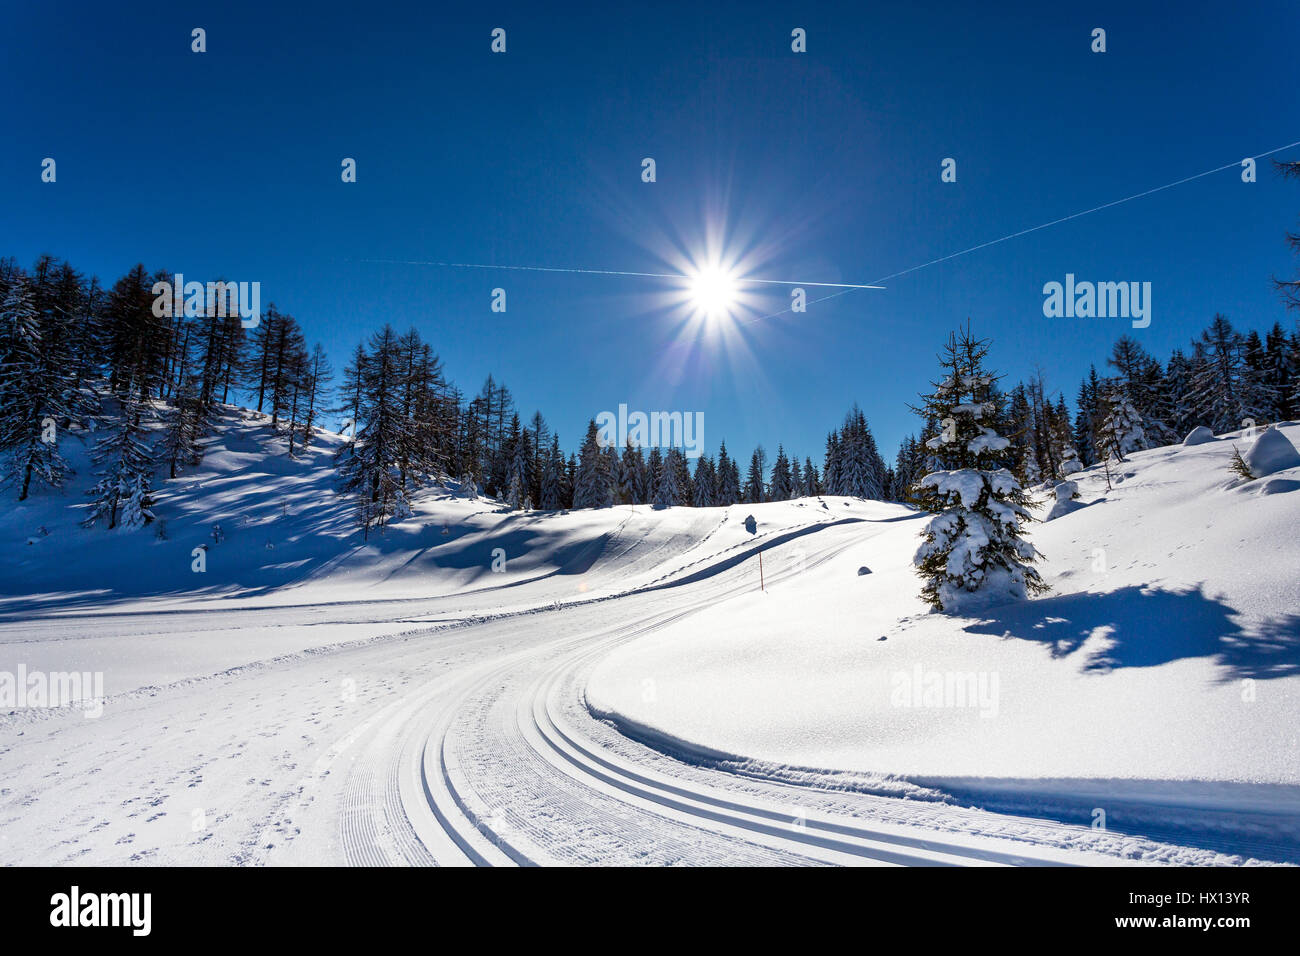 Austria, St Johann im Pongau, Alpendorf, Obergassalm, snow-covered winter landscape Stock Photo